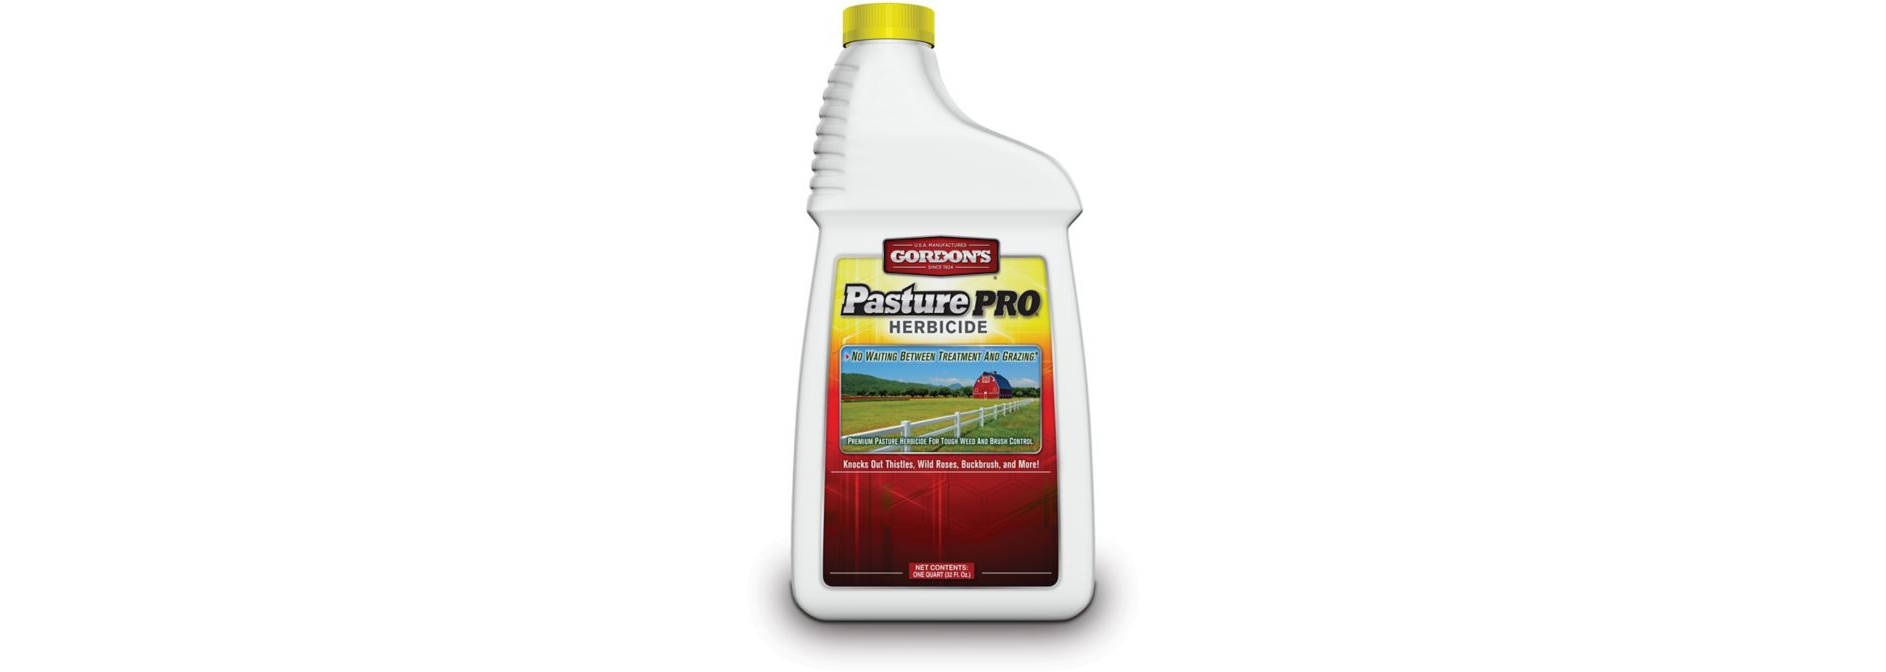 pasture-pro-herbicide-weed-killer-1-quart